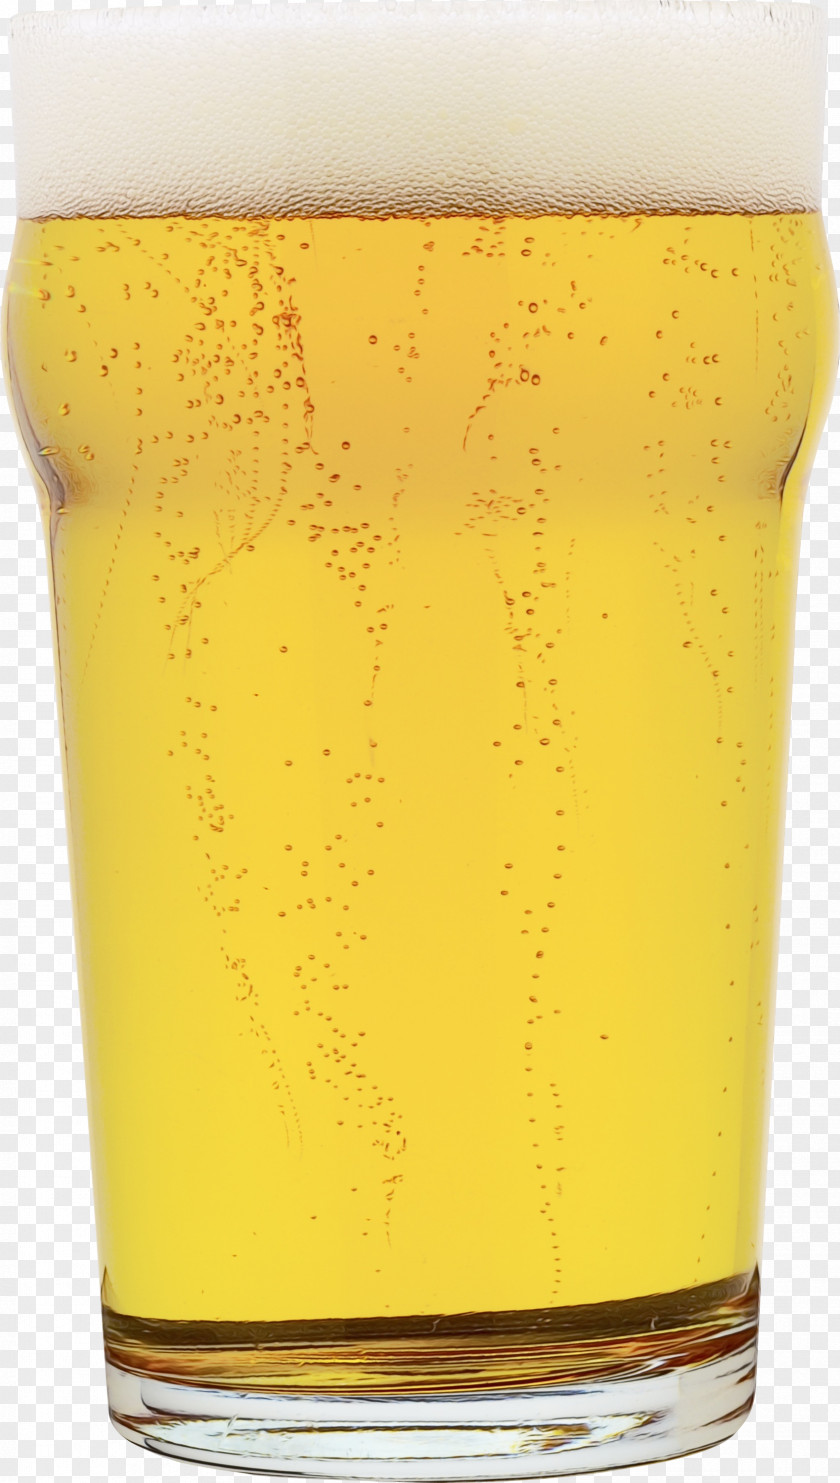 Juice Tumbler Pint Glass Drink Beer Yellow PNG